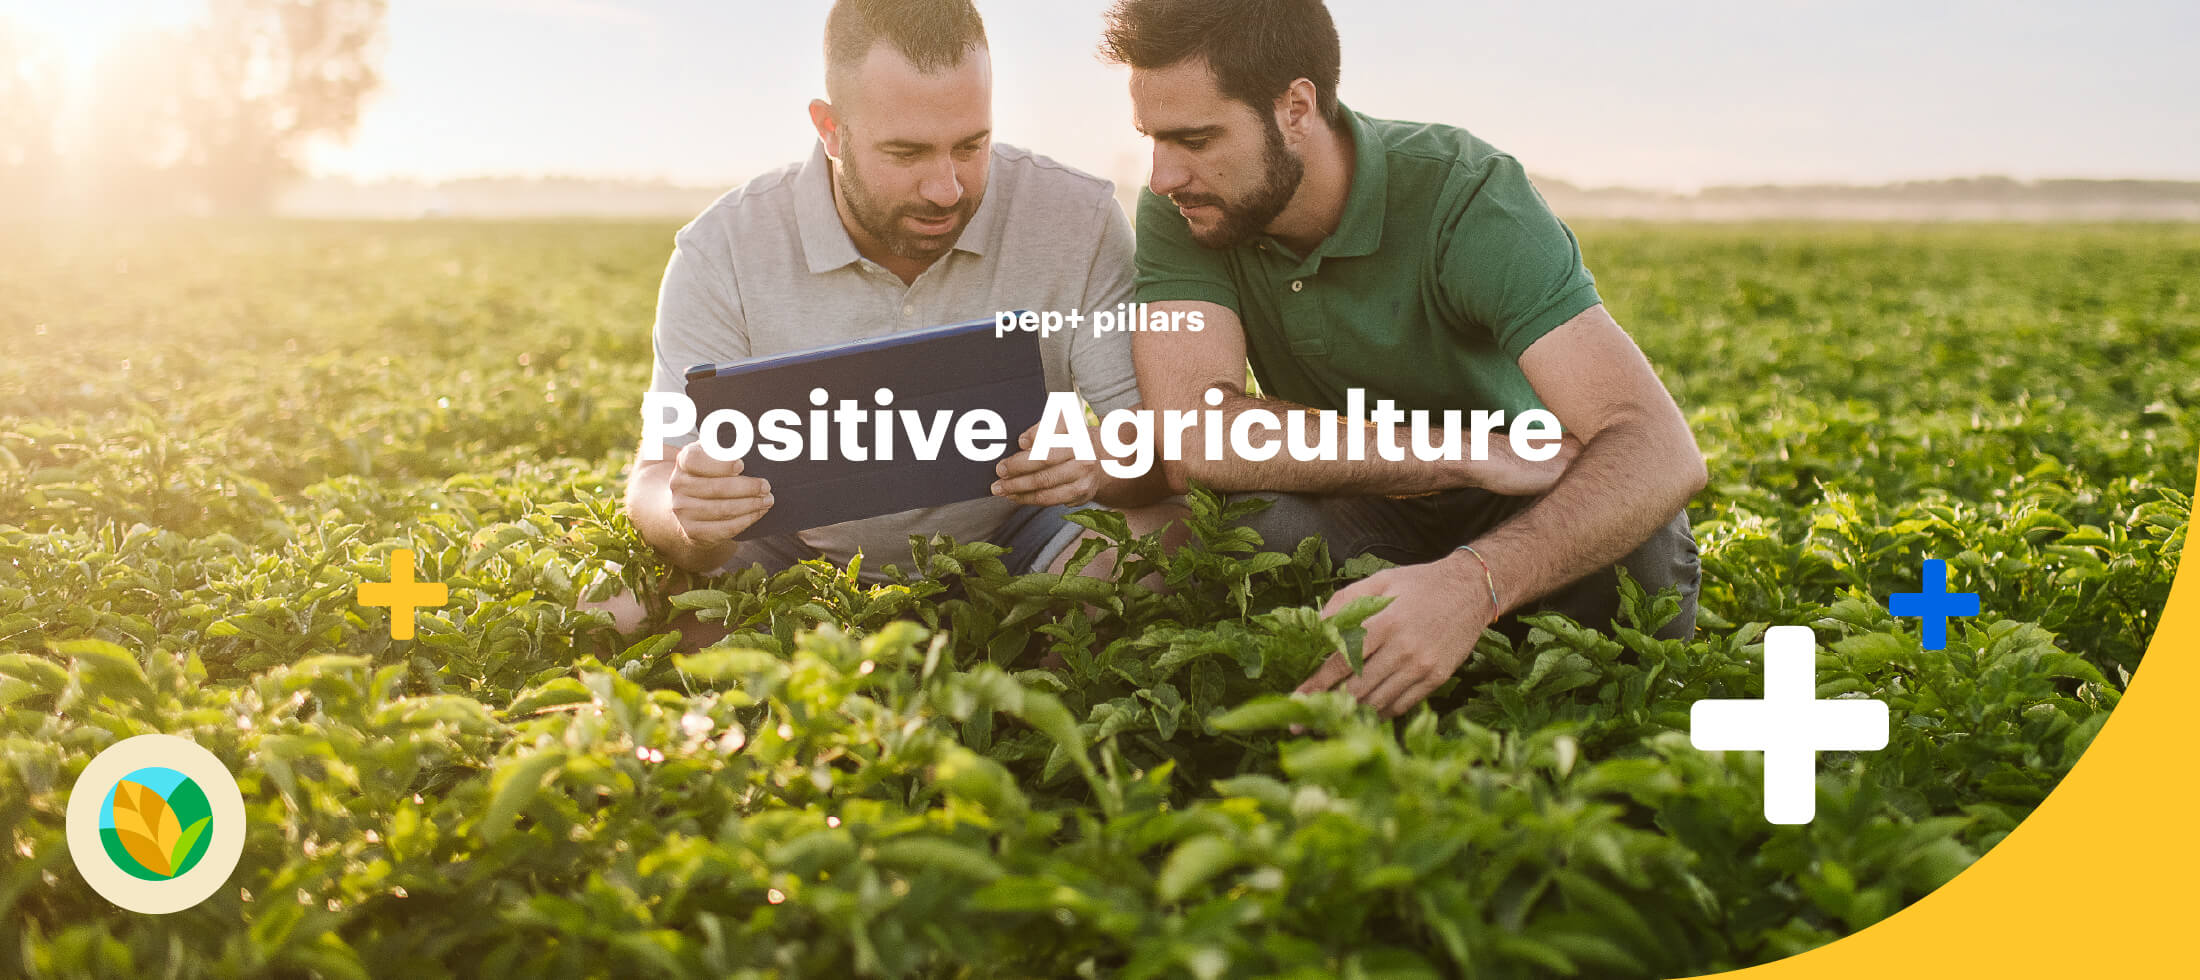 pep+ pillars: Positive Agriculture